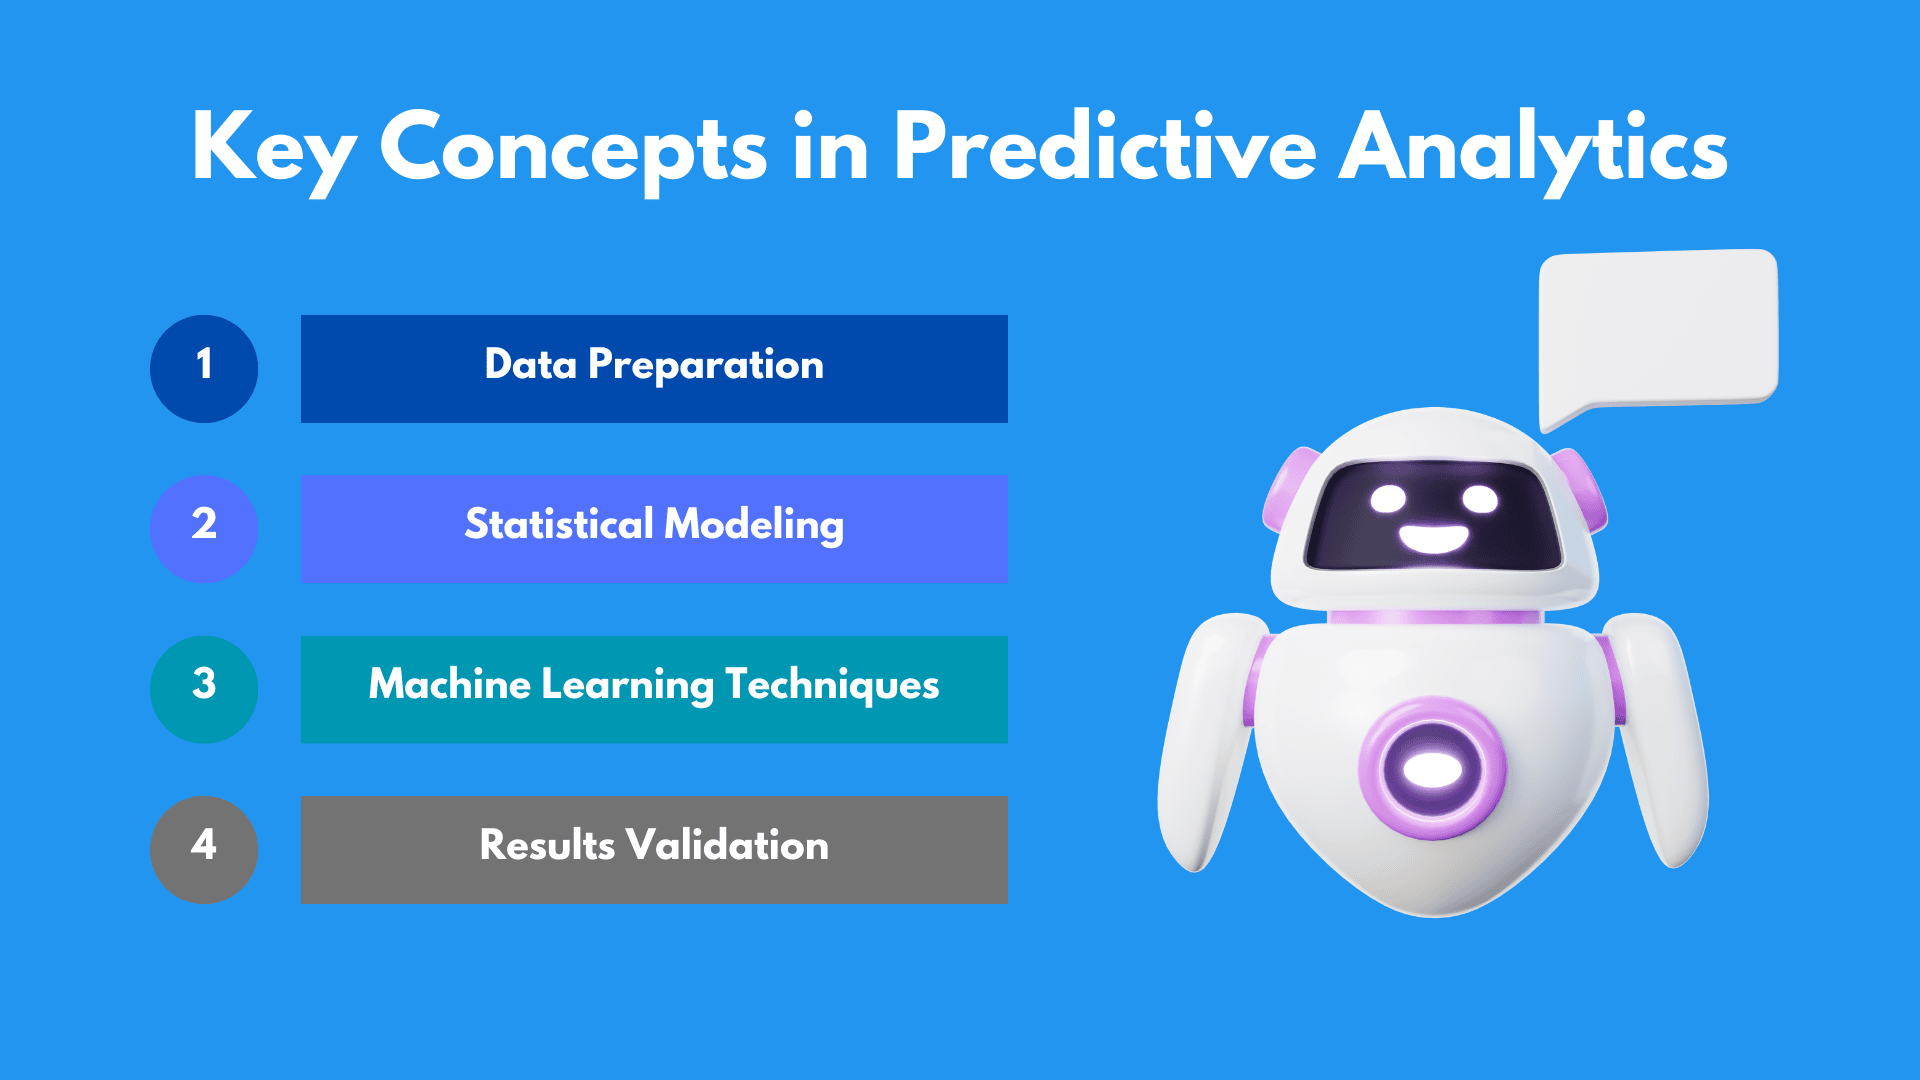 Key Concepts in Predictive Analytics
